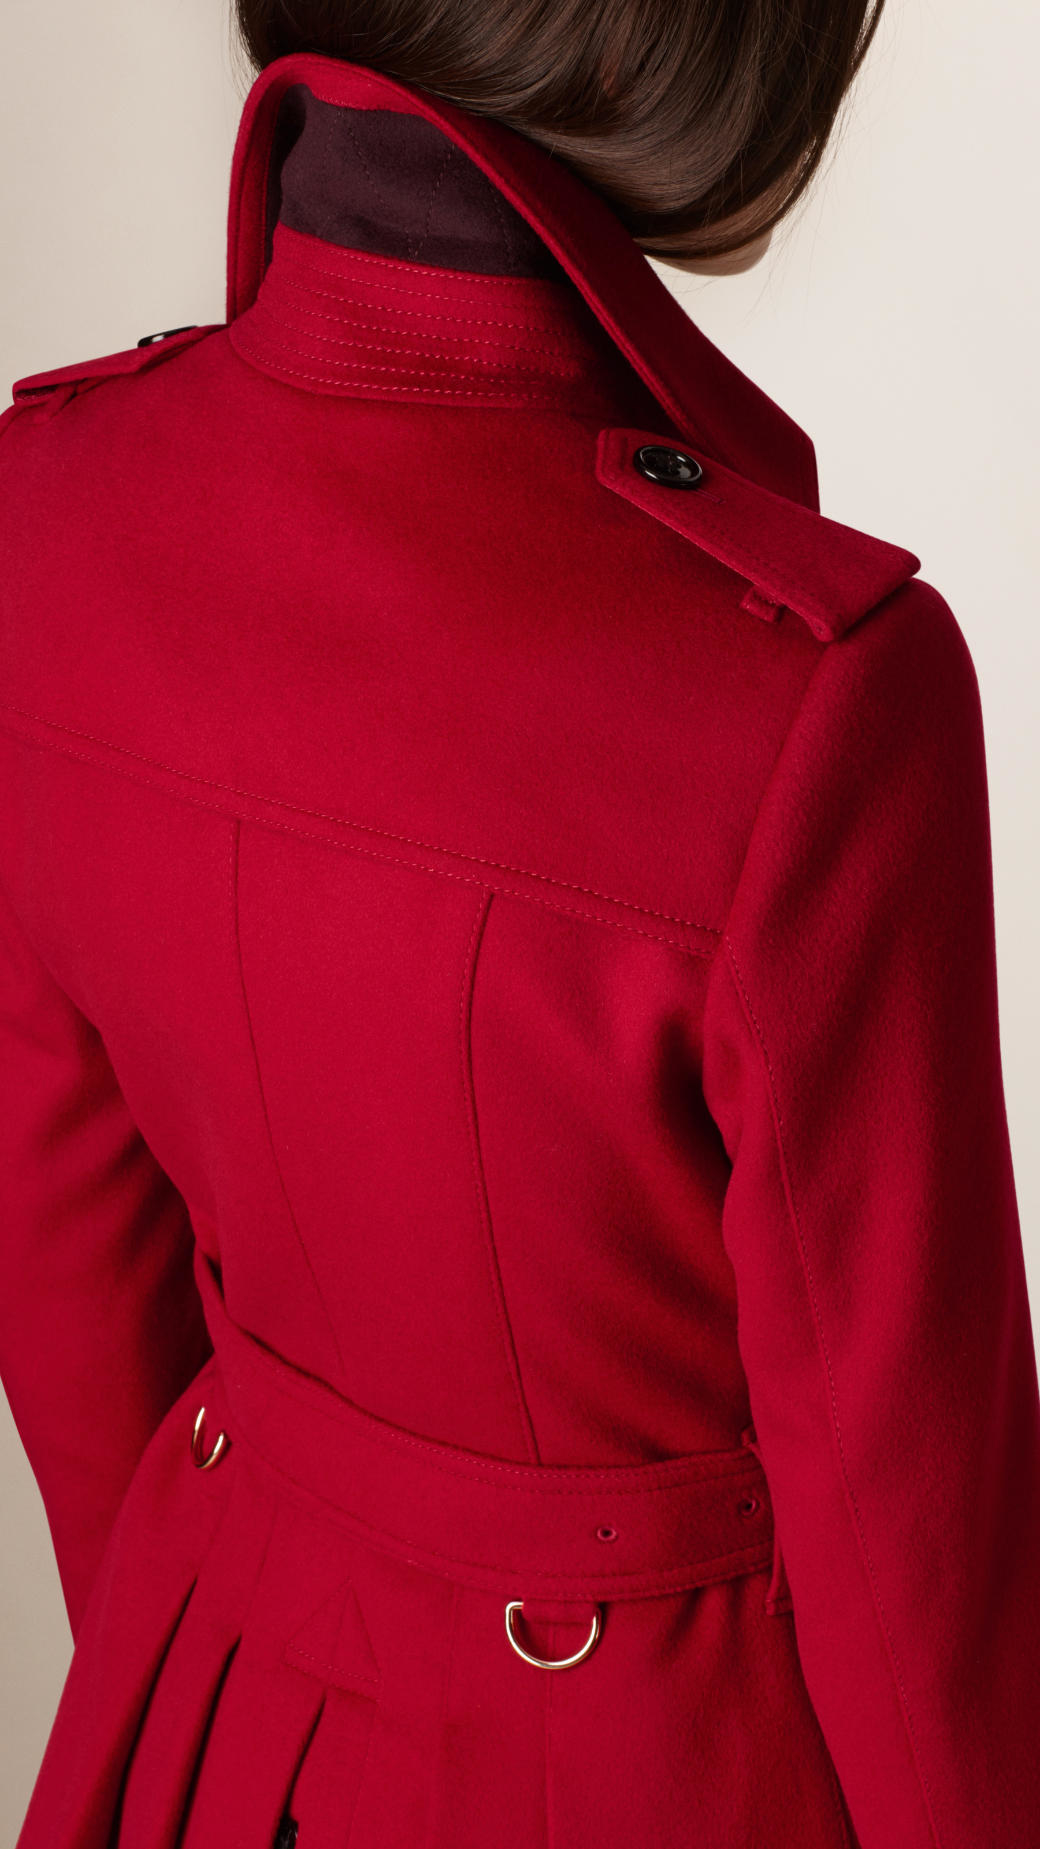 red burberry coat